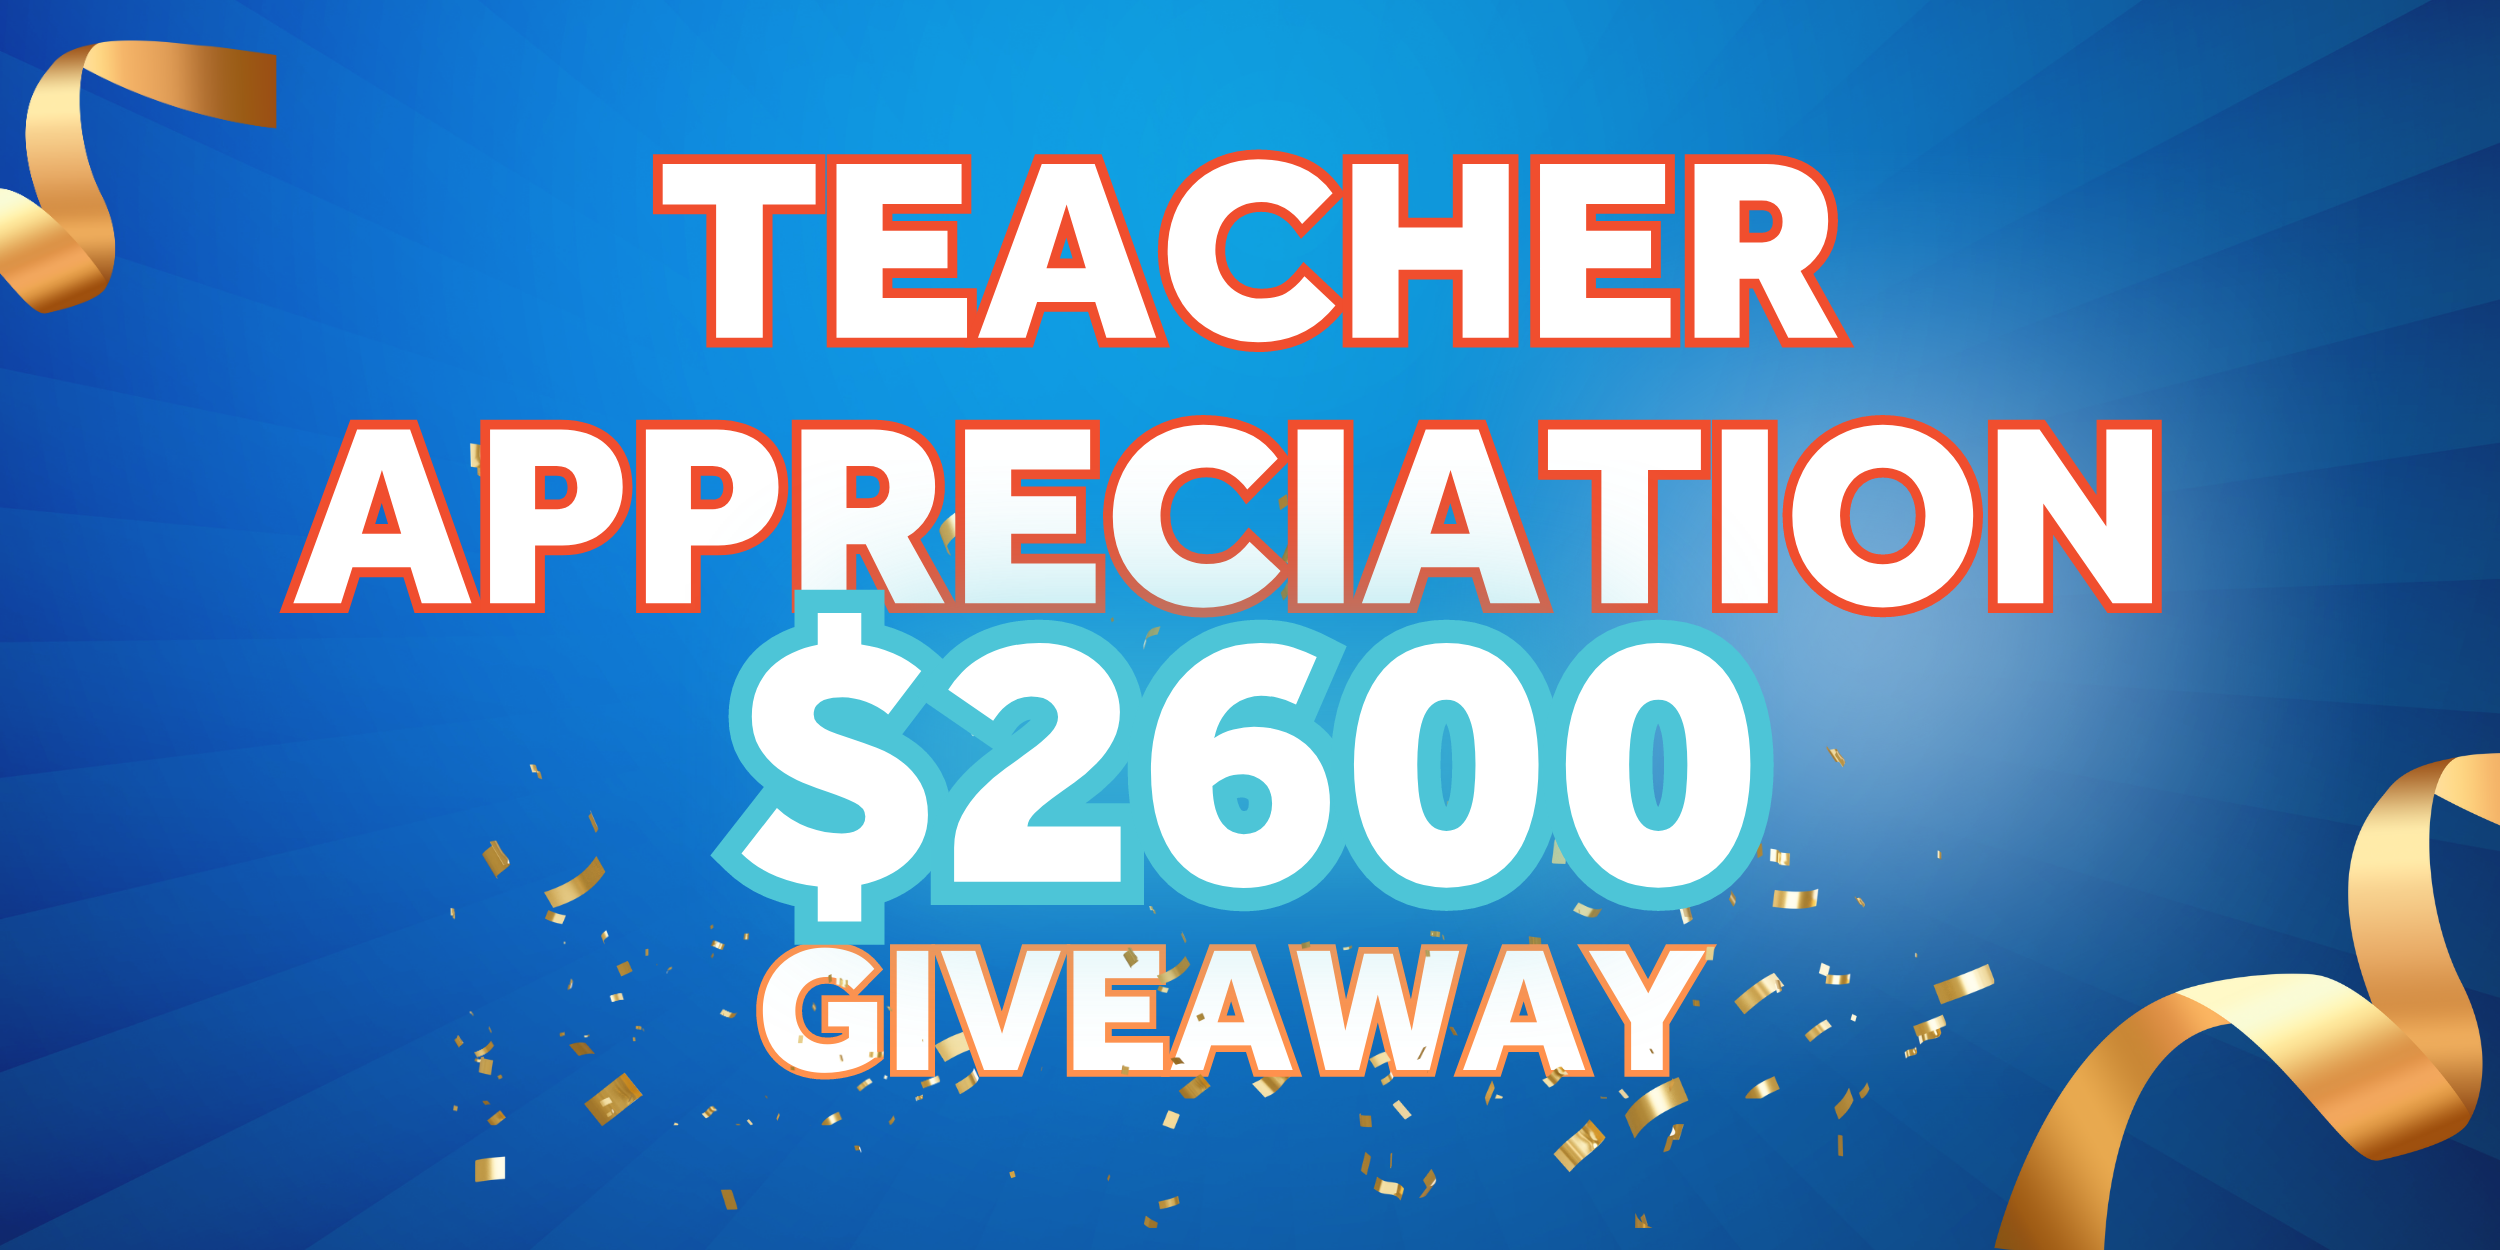 Bambino Sitters teacher Giveaway $2600